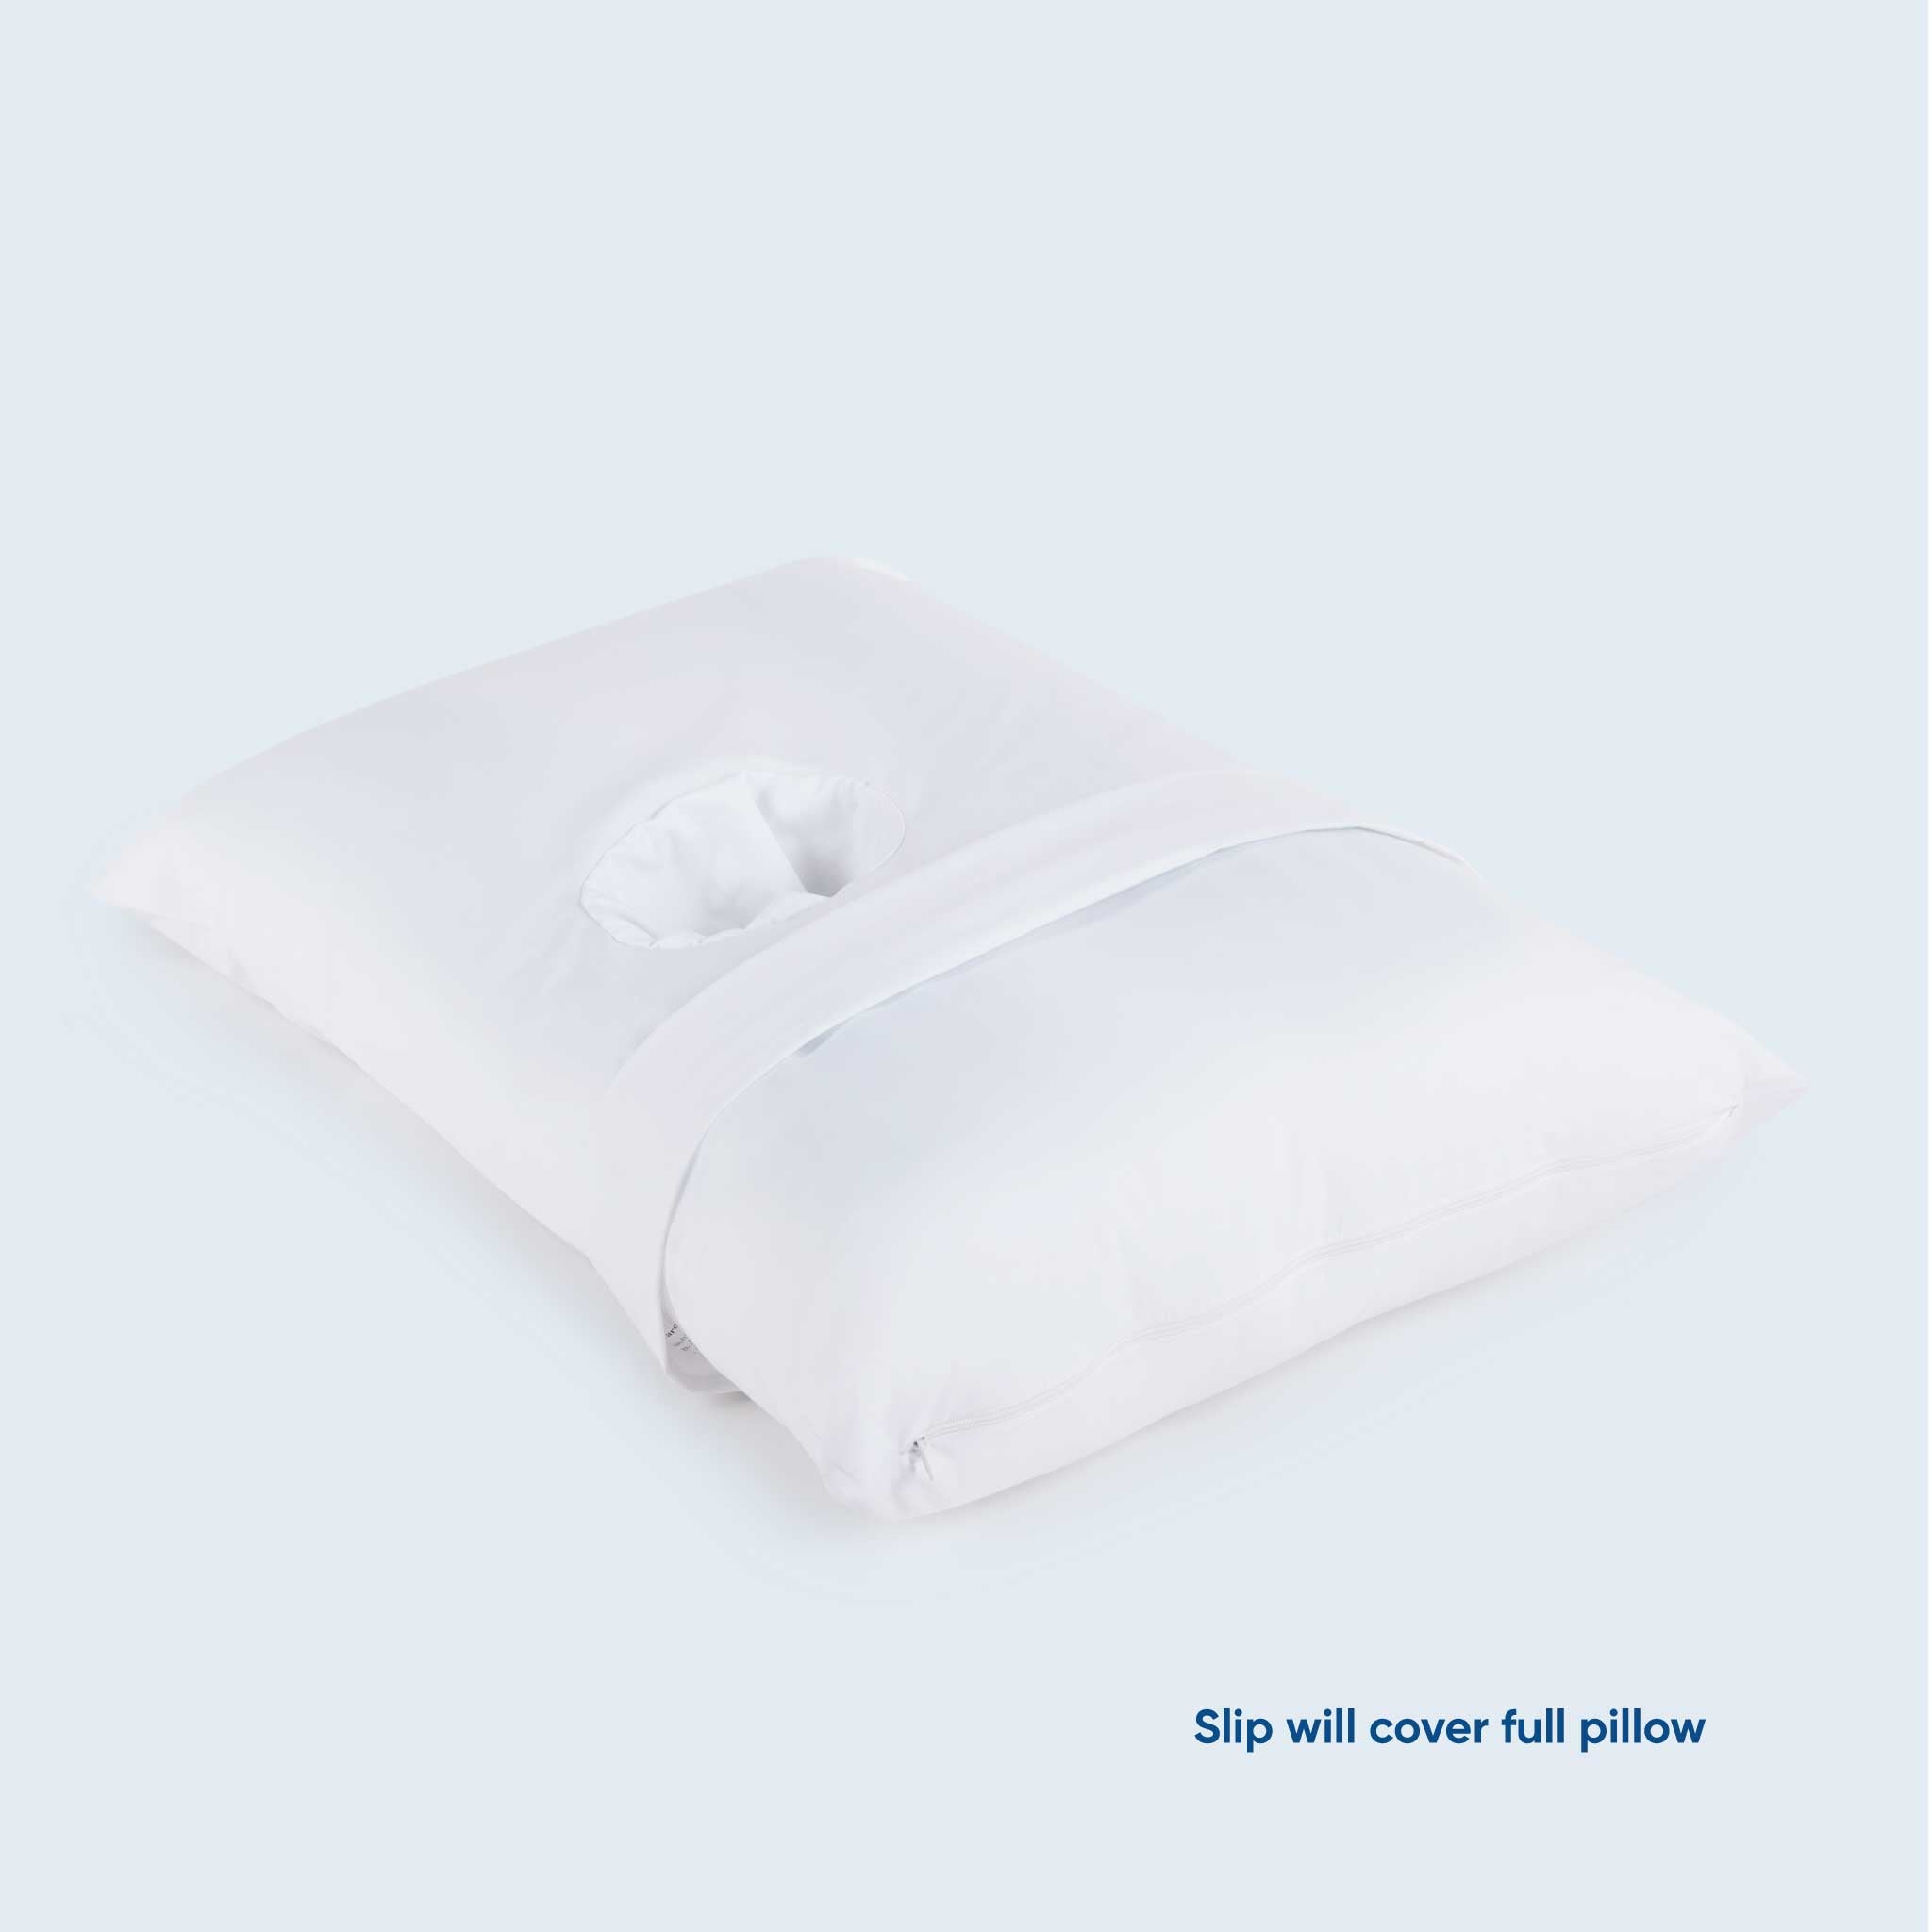 CNH Holey Ear Pillow 100% Cotton Cover